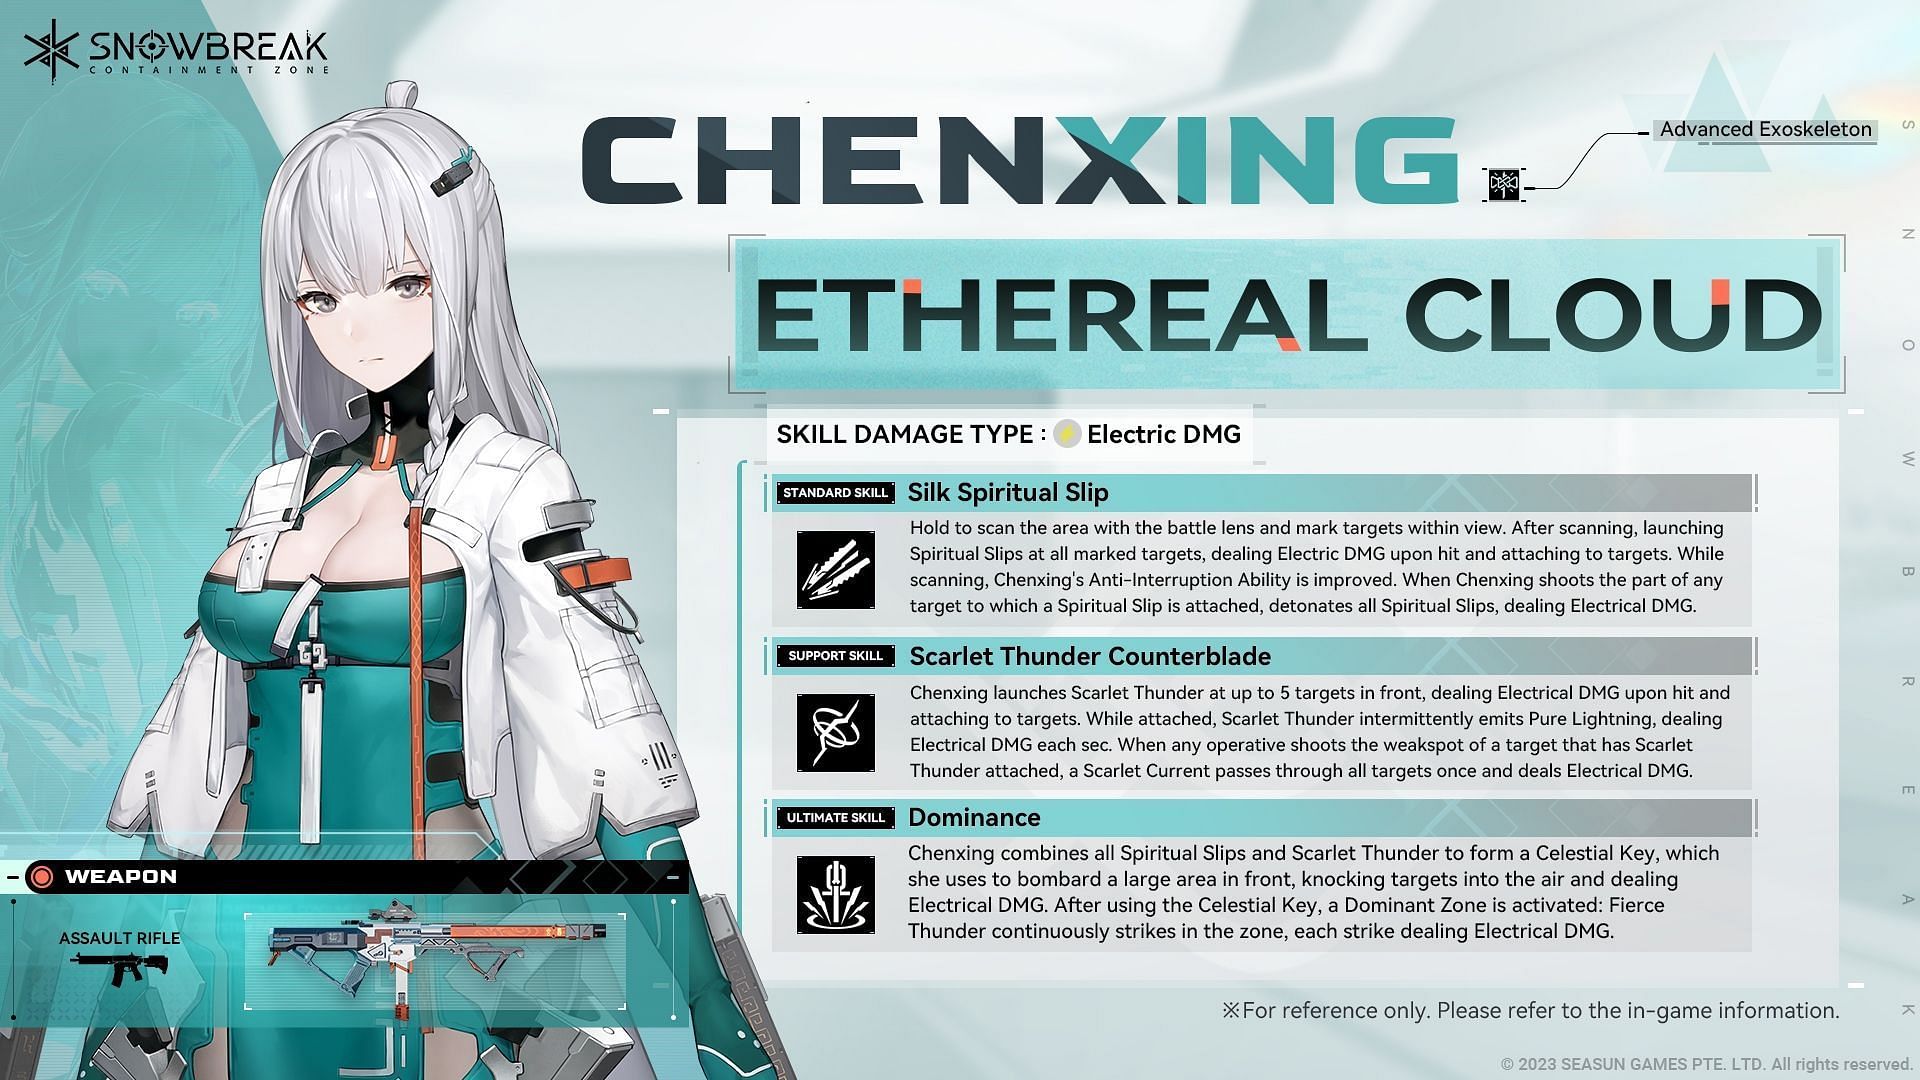 Chenxing Ethereal Cloud in Snowbreak Containment Zone. (Image via Seasun Games)